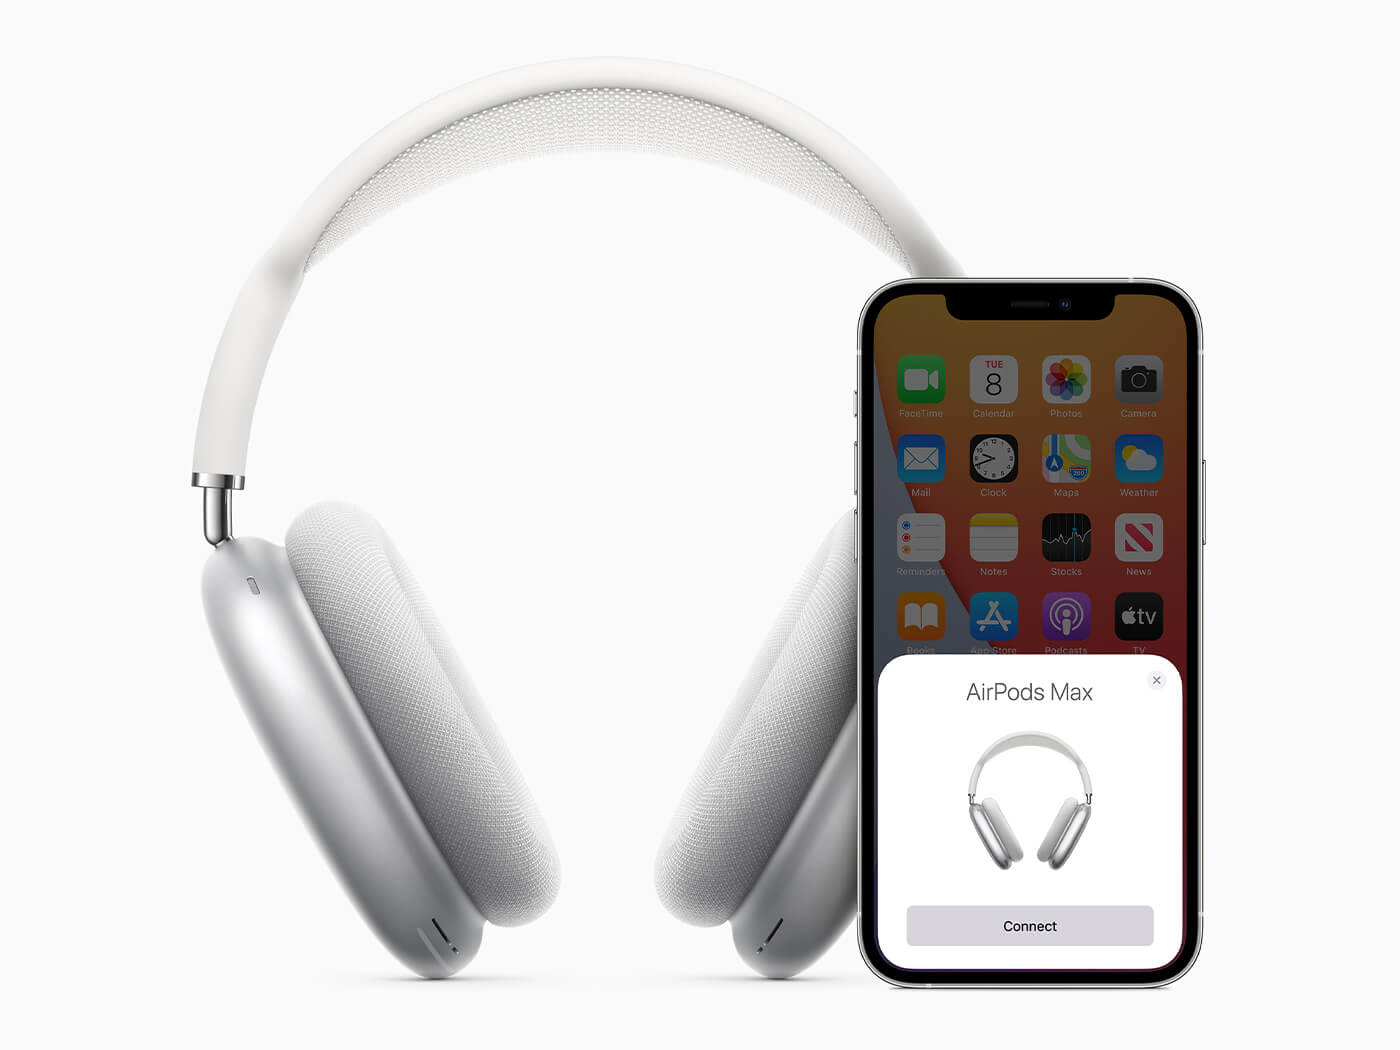 Apple AirPods Max pairing 